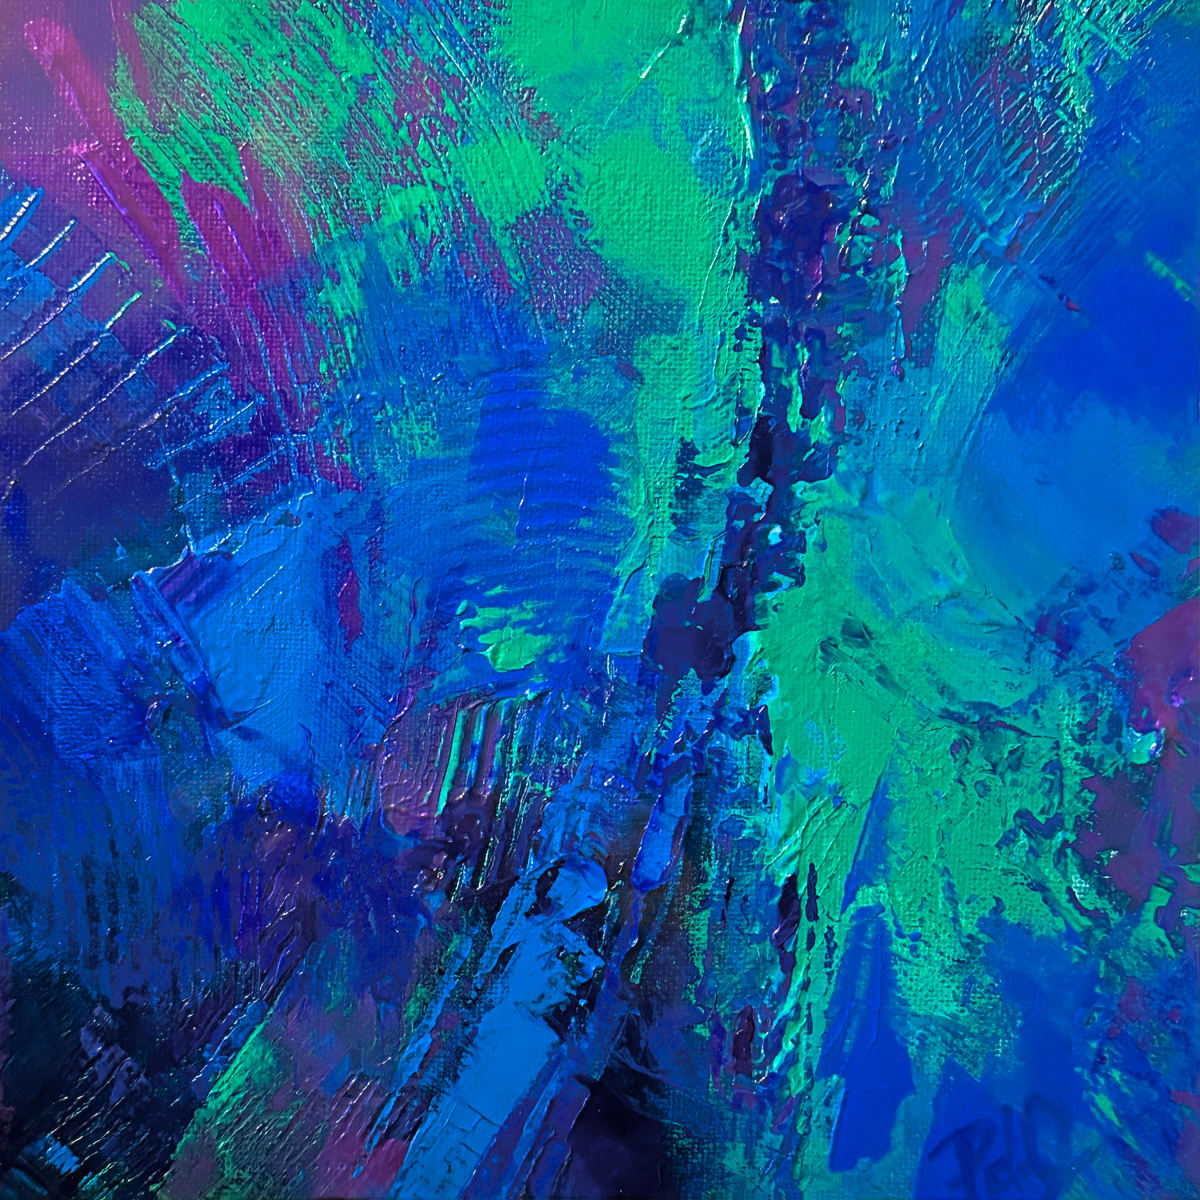 Deep Blue Sea III by Phyllis Mantik deQuevedo  Image: 10 x 10 - Acrylic on Canvas Board